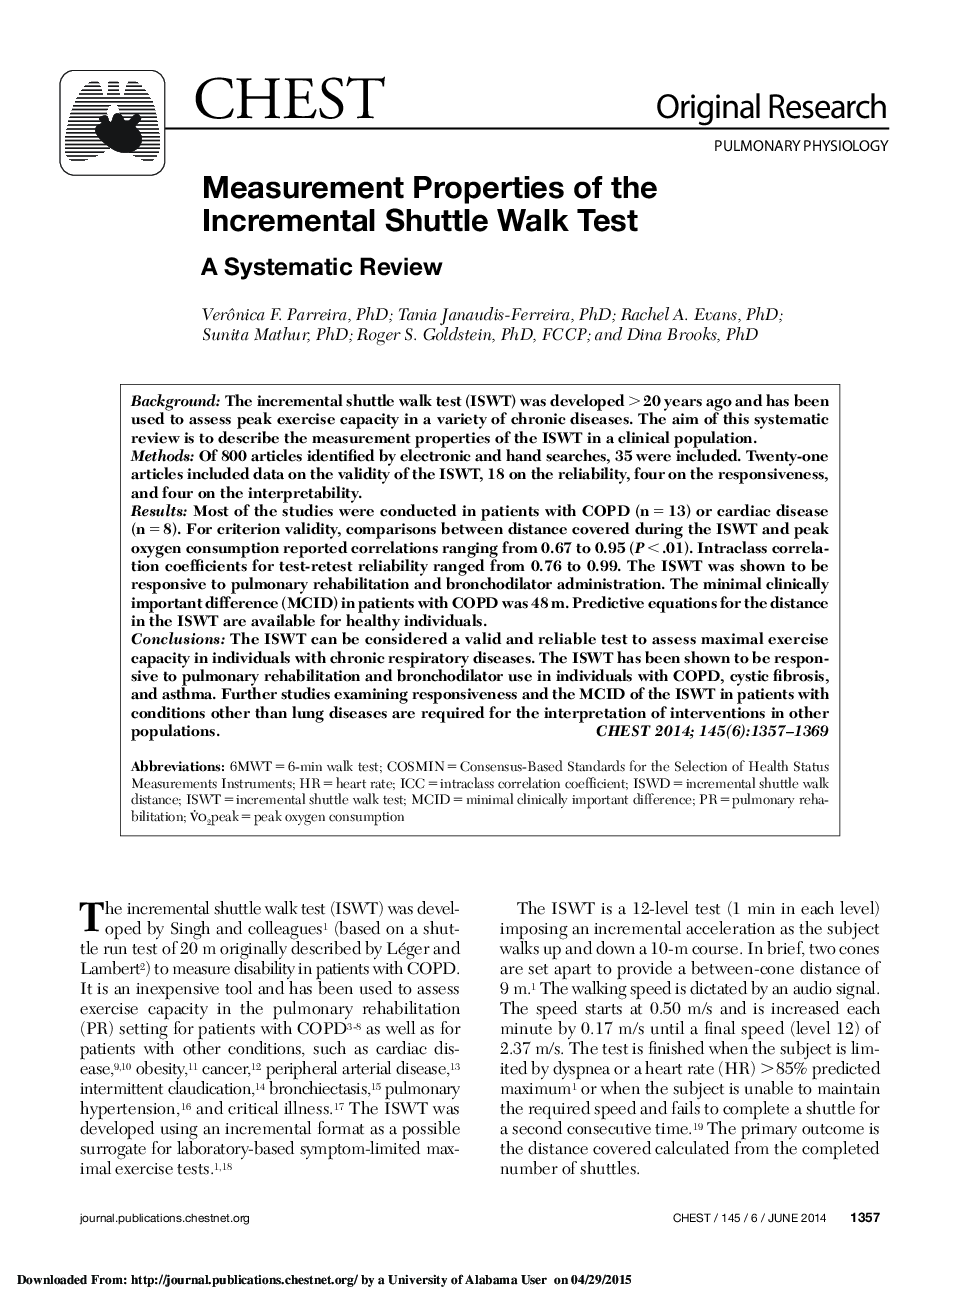 Measurement Properties of the Incremental Shuttle Walk Test